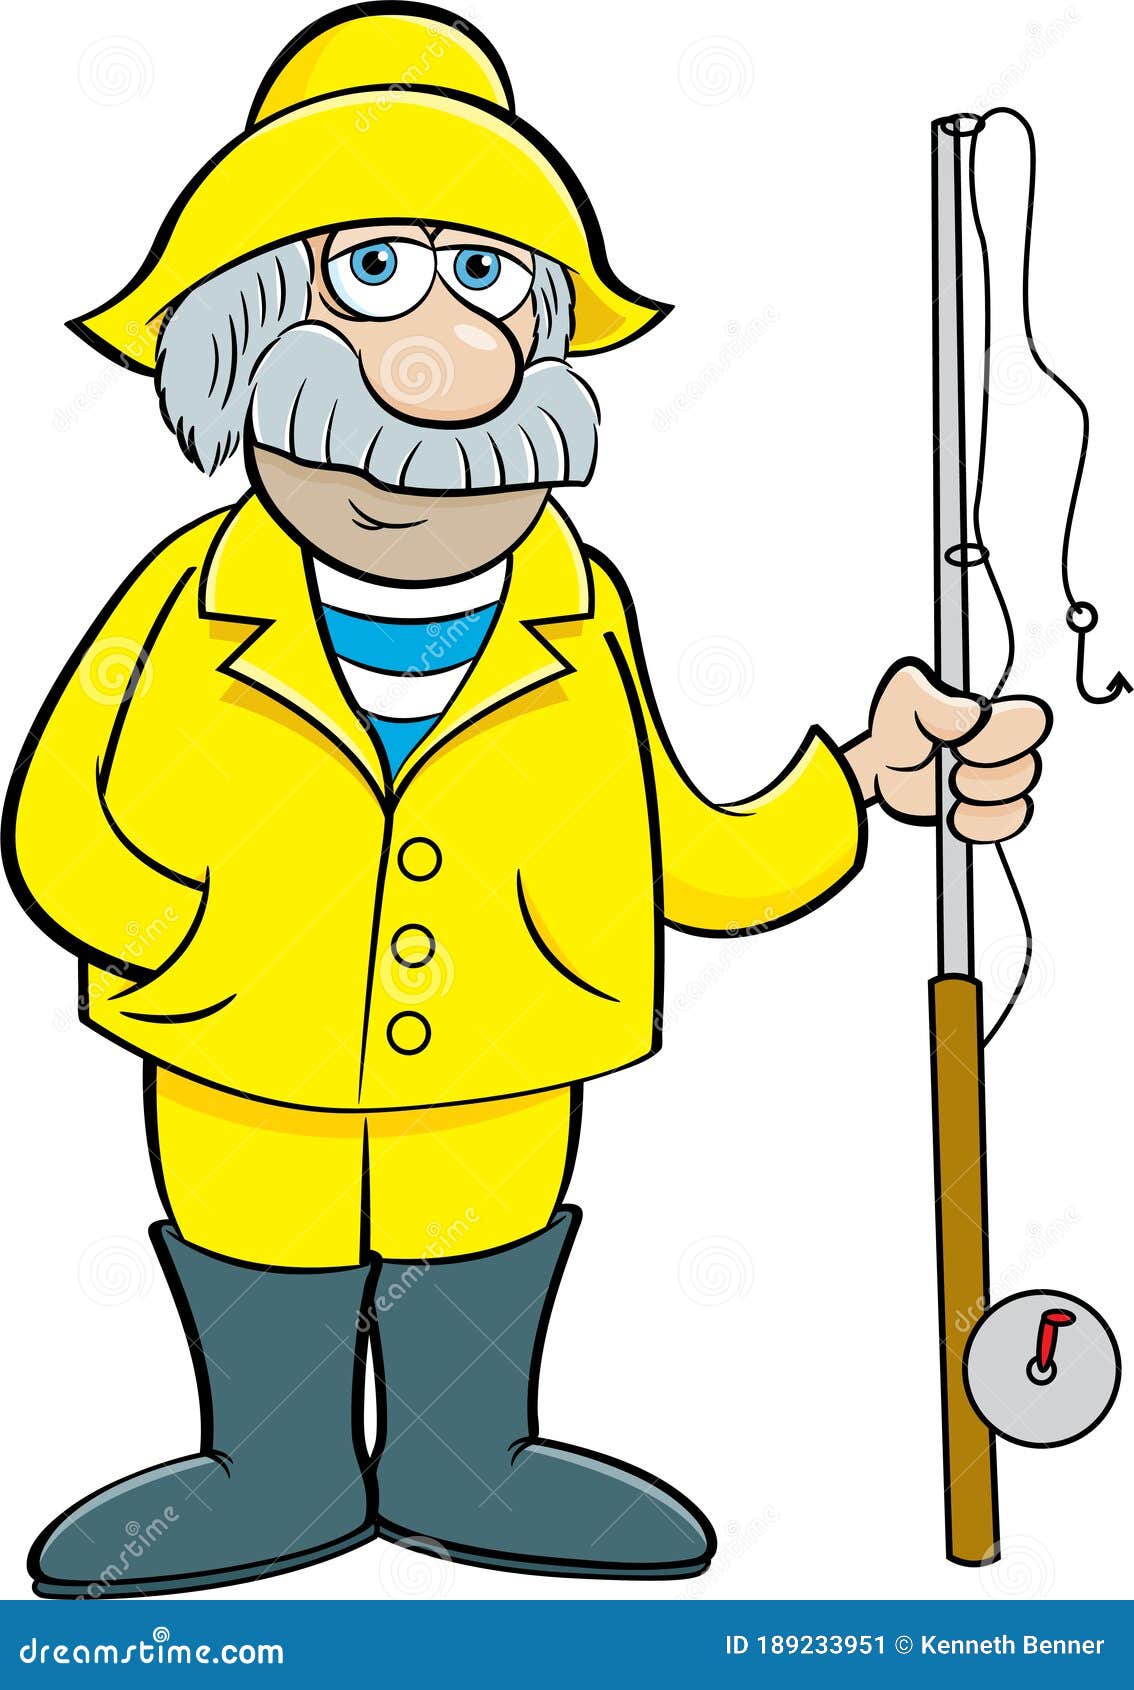 Cartoon Old Sea Captain Holding A Fishing Pole. Stock ...